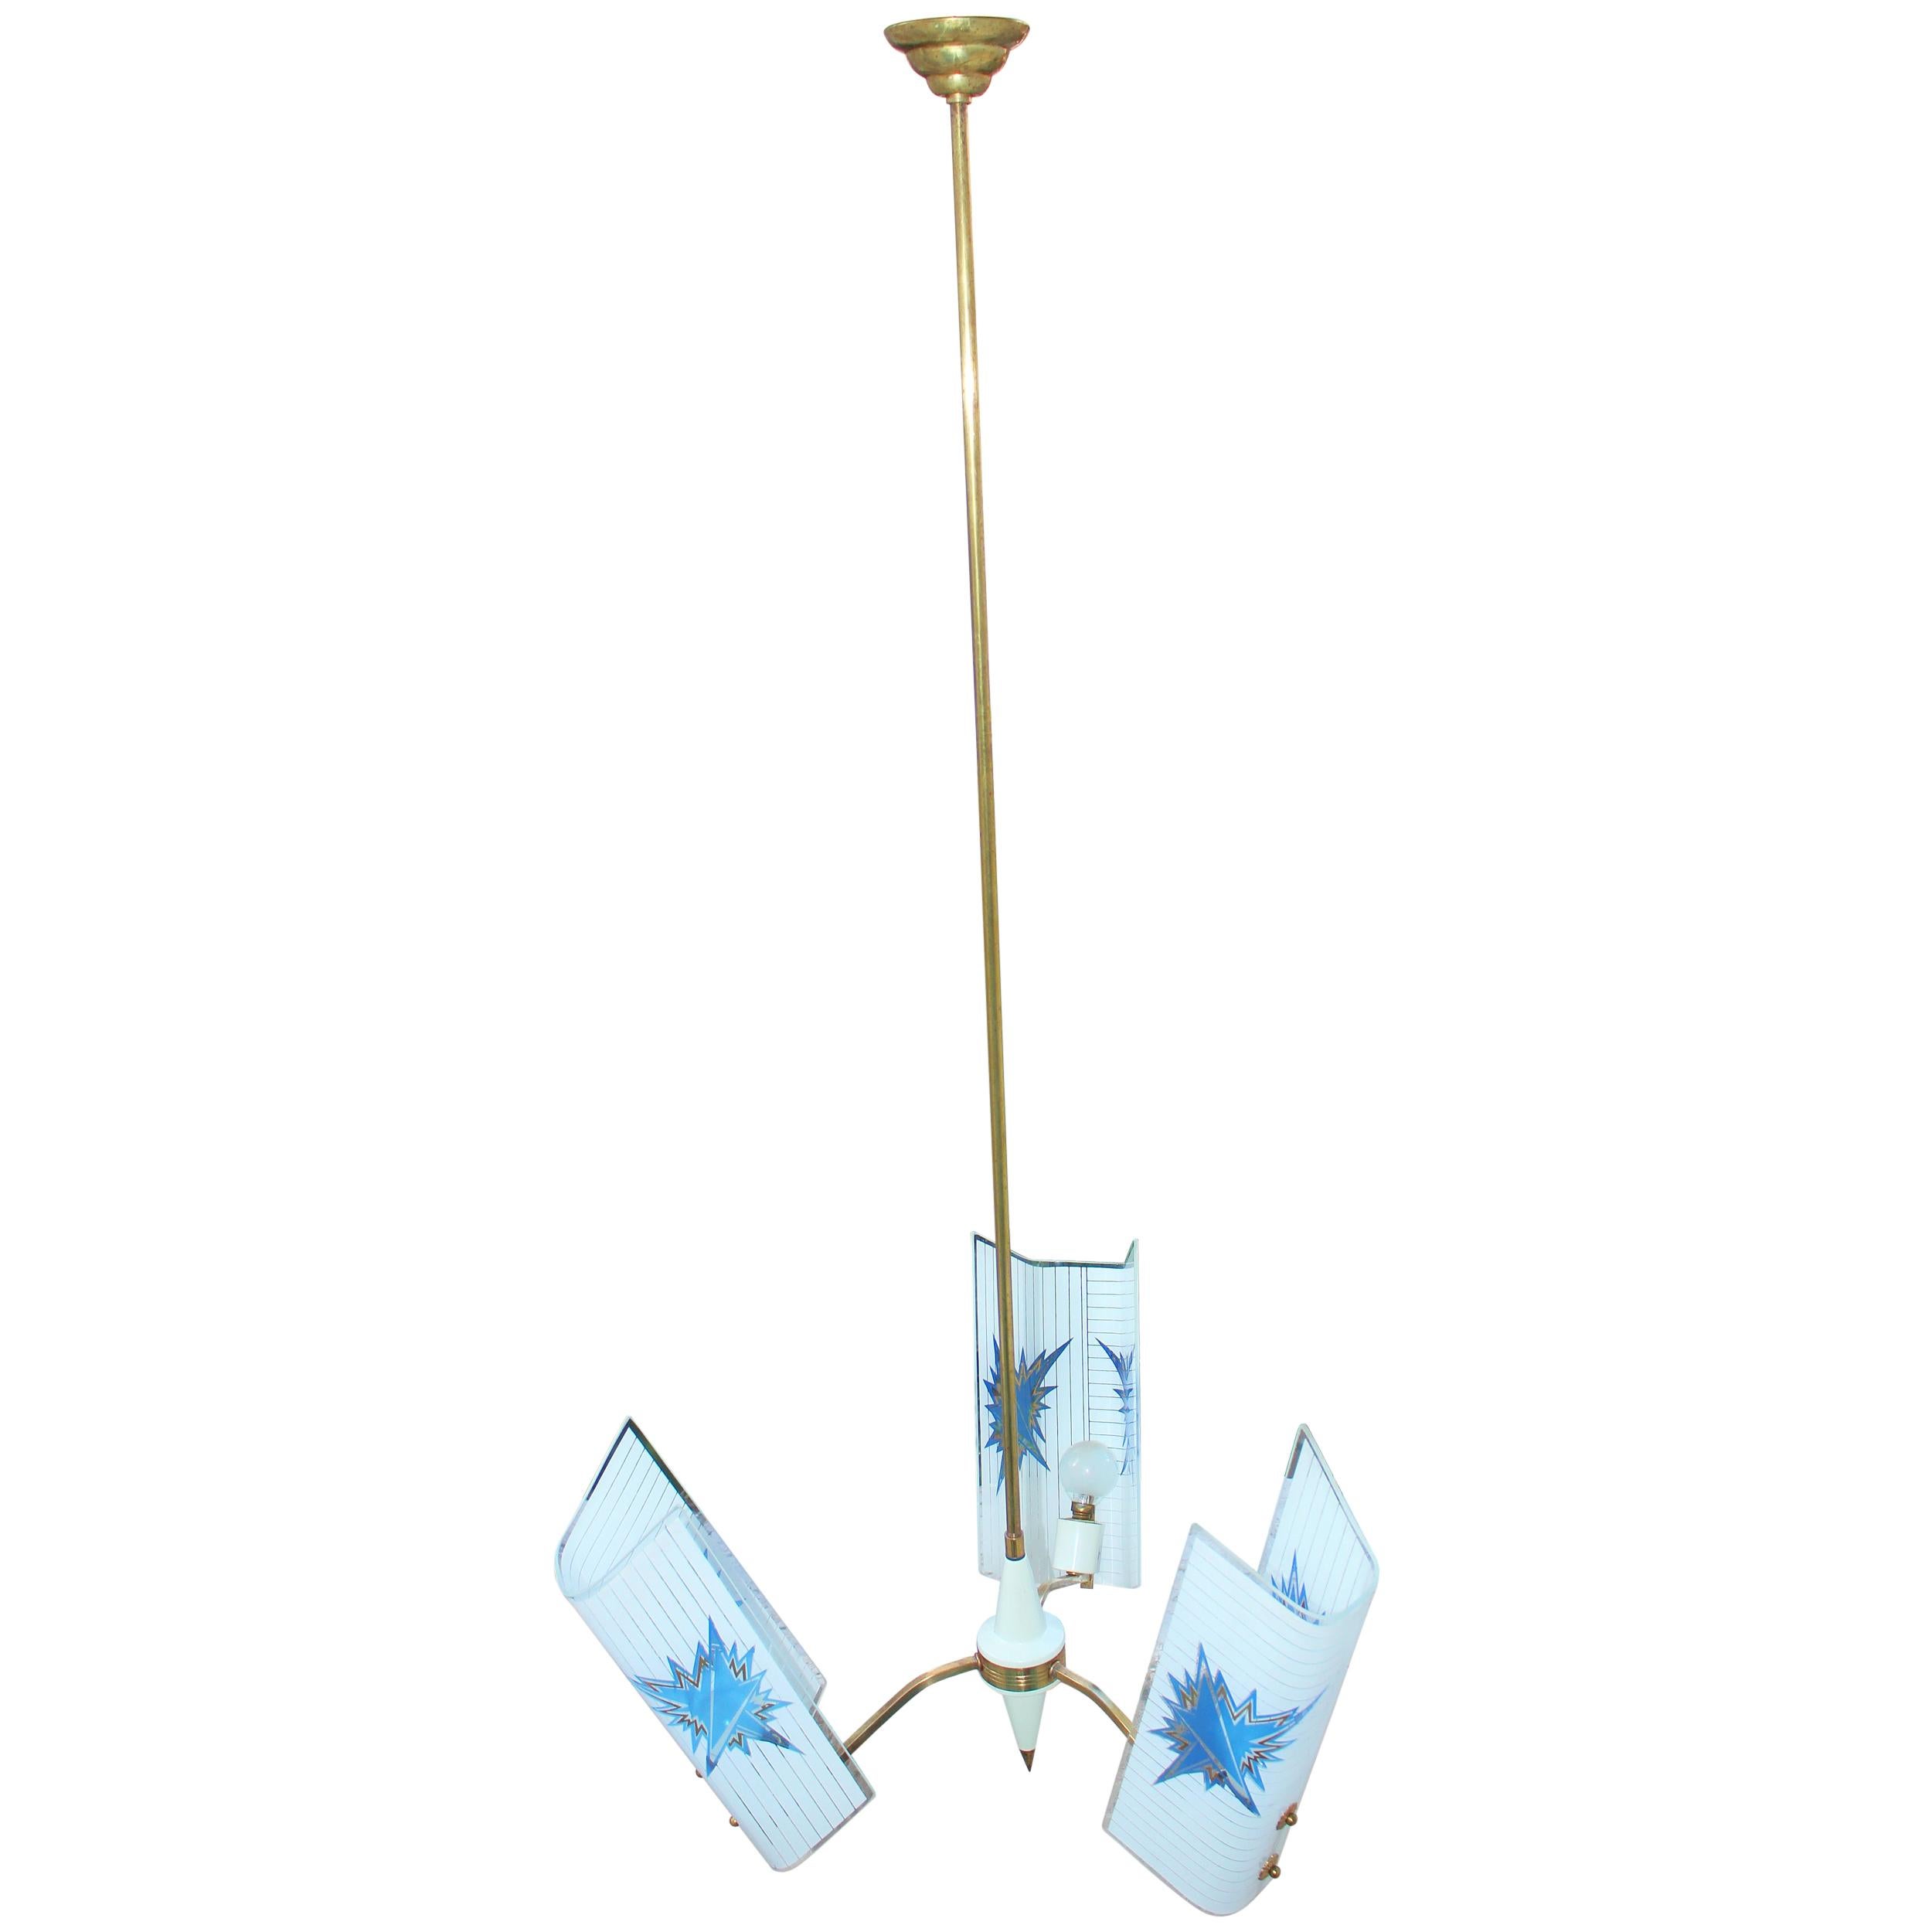 Brass Italian chandelier, period 1950 s brass base and glass.